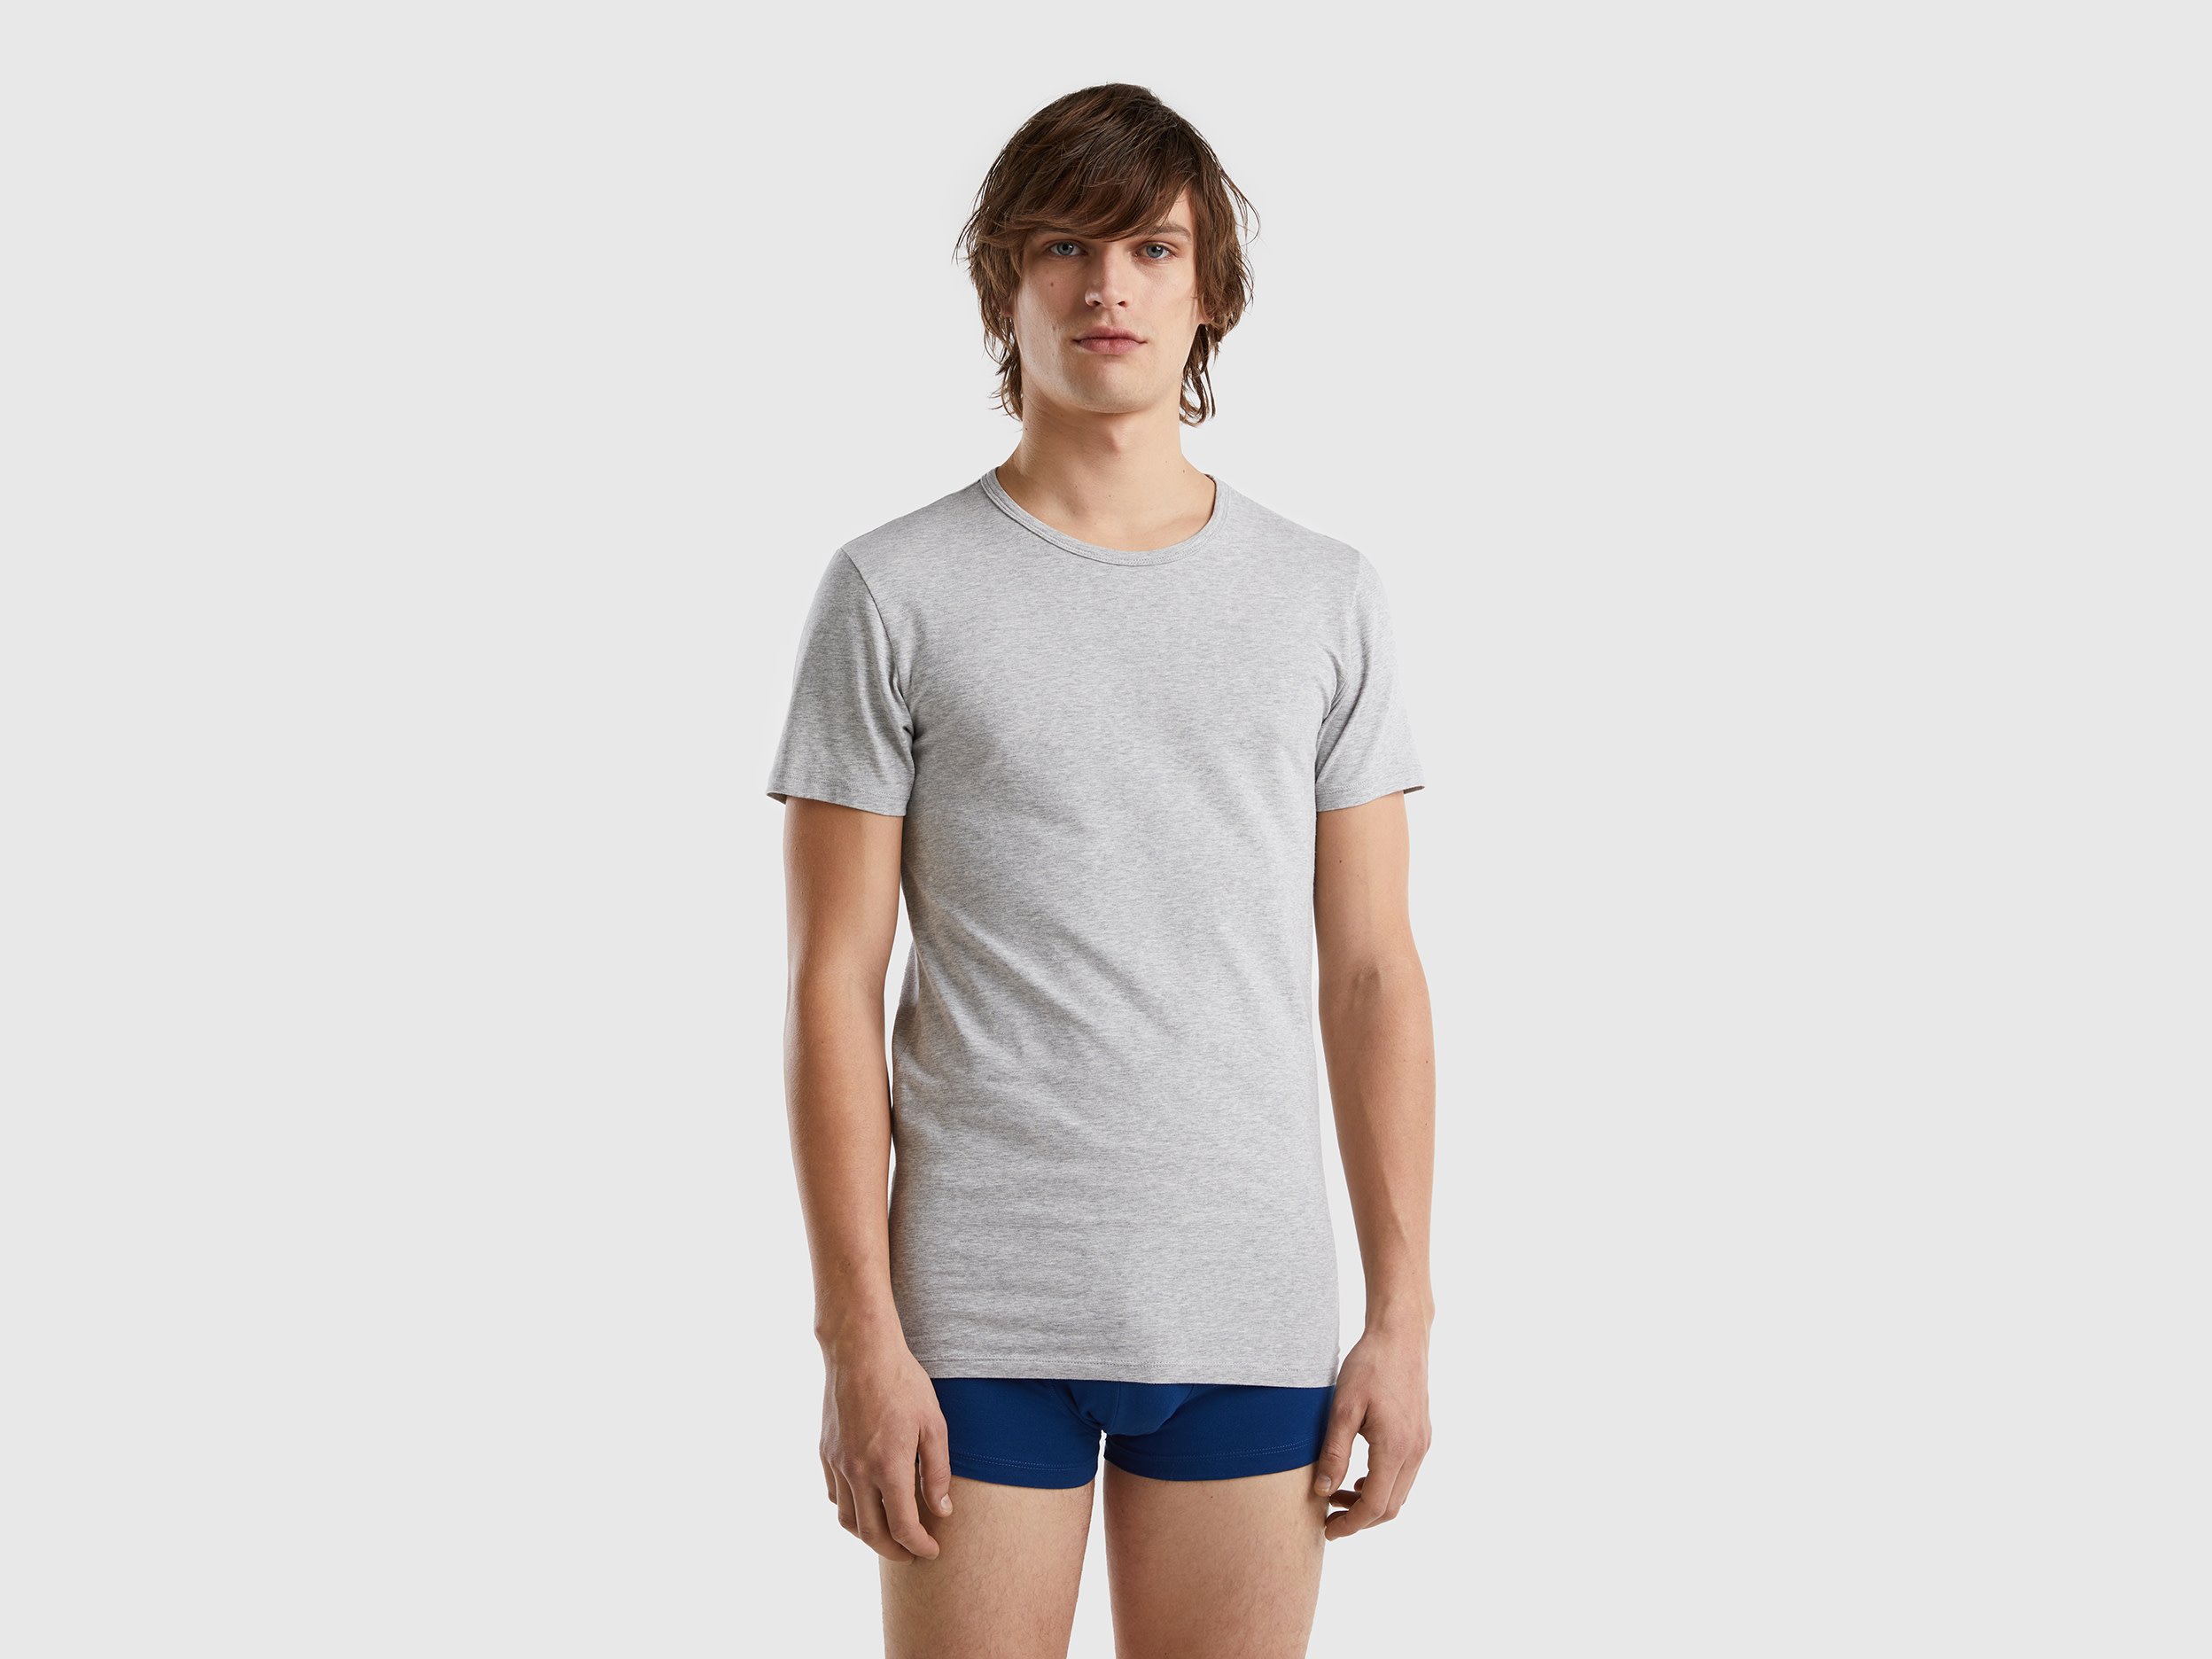 Image of Benetton, Organic Stretch Cotton T-shirt, size XL, Light Gray, Men